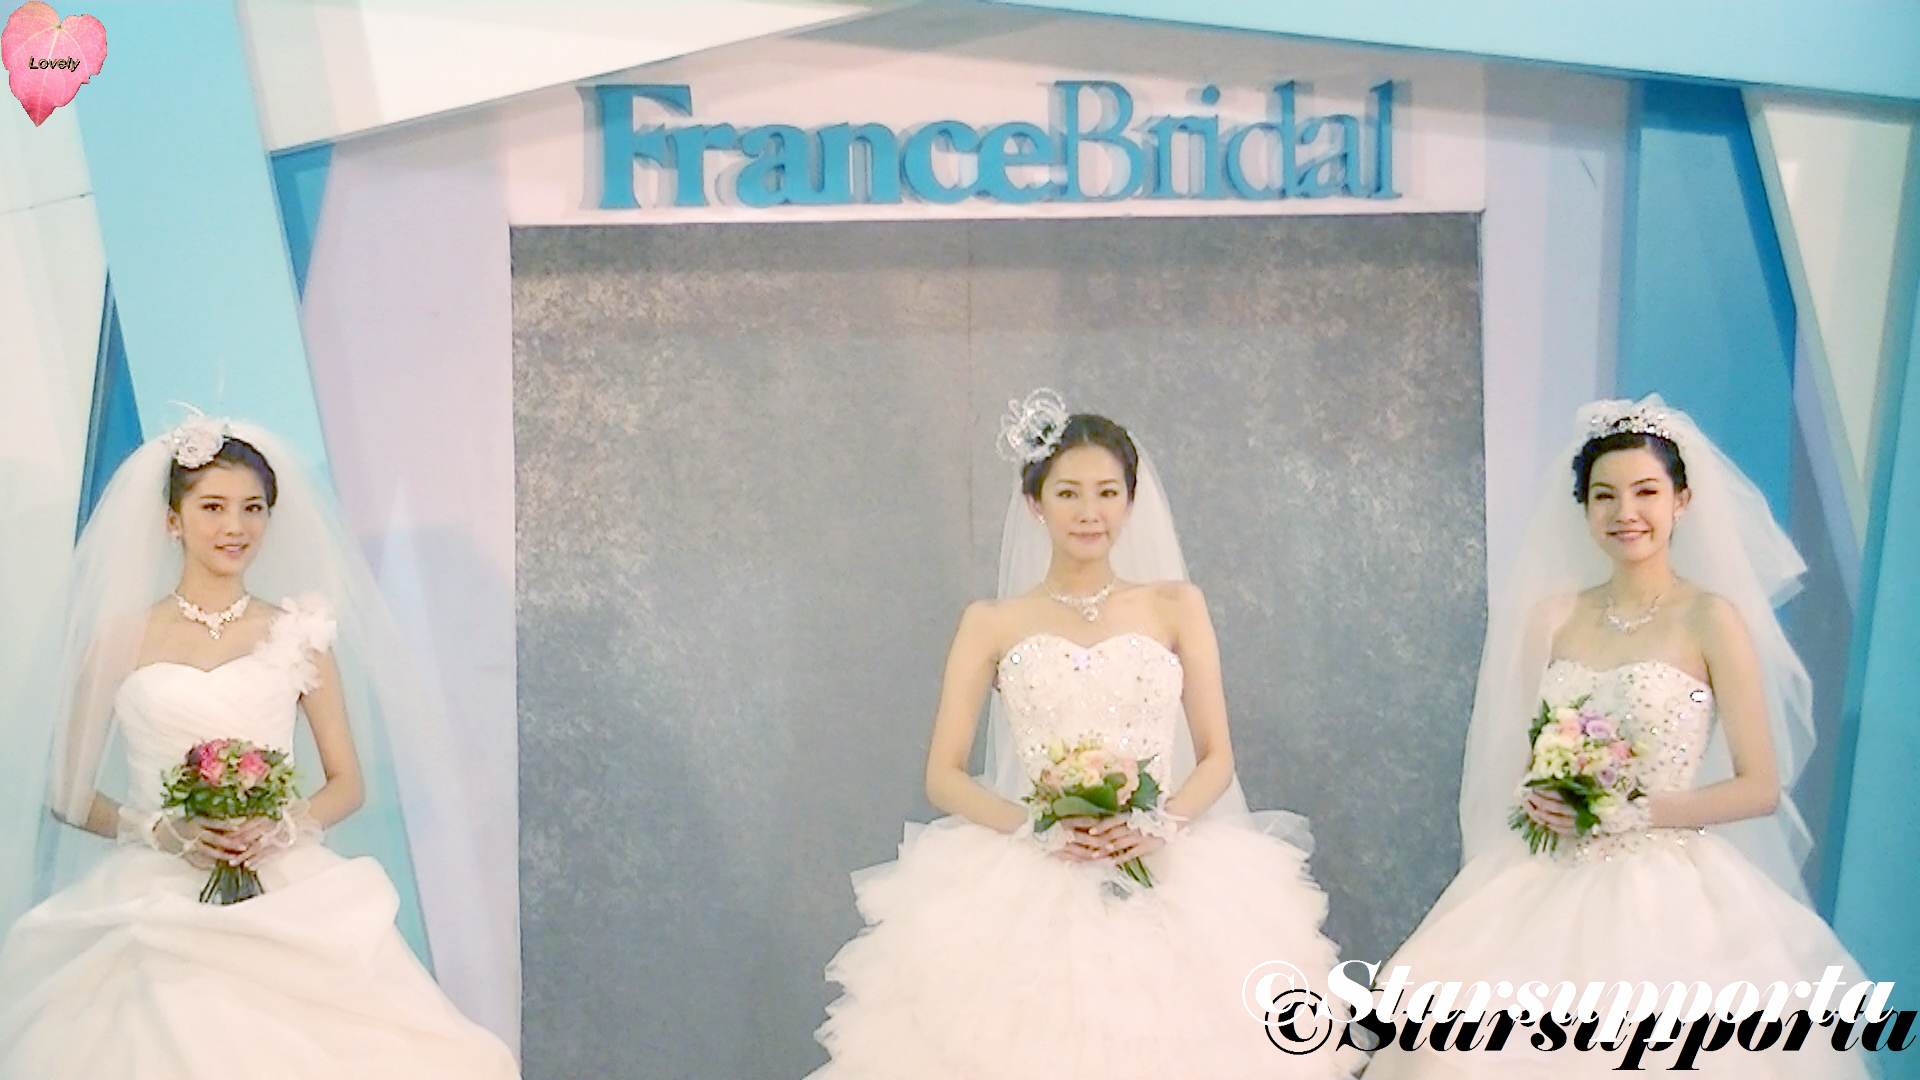 20120714 Hong Kong Wedding & Wedding Accessories Expo - France Bridal @ 香港會議展覽中心 HKCEC (video)